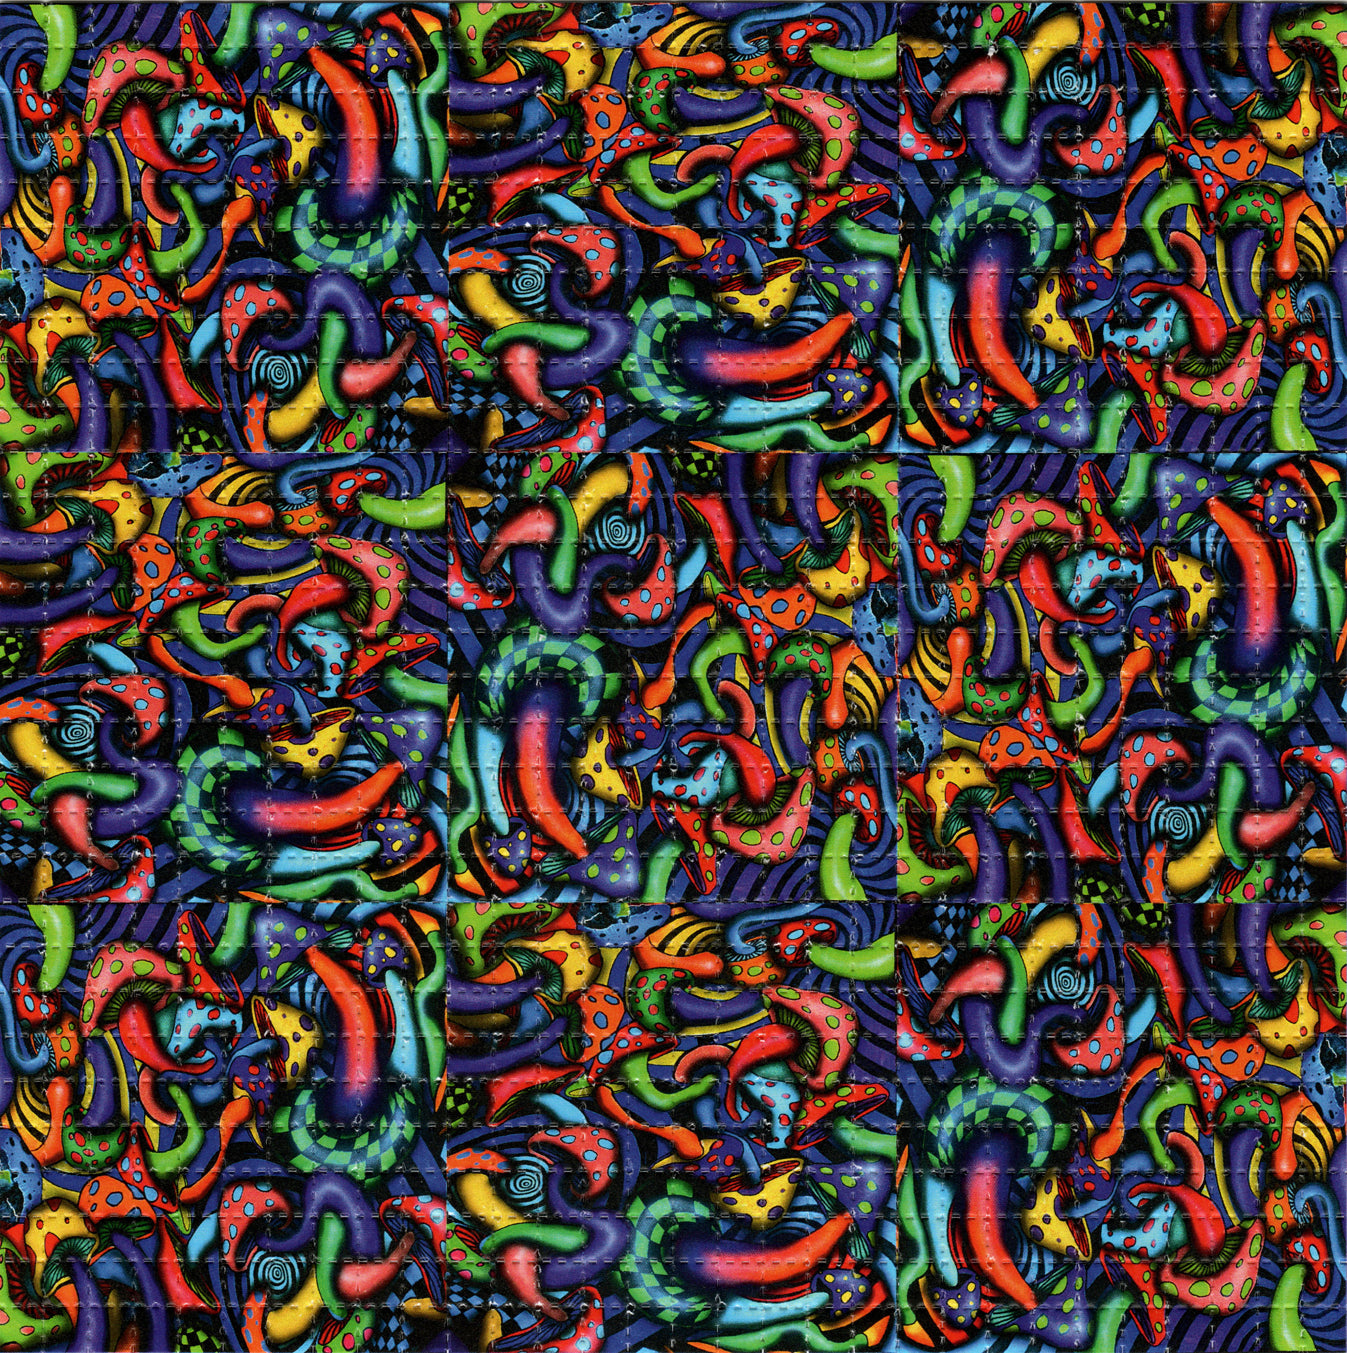 Technicolor Magic Mushrooms by Visual Fiber SIGNED Limited Edition LSD blotter art print